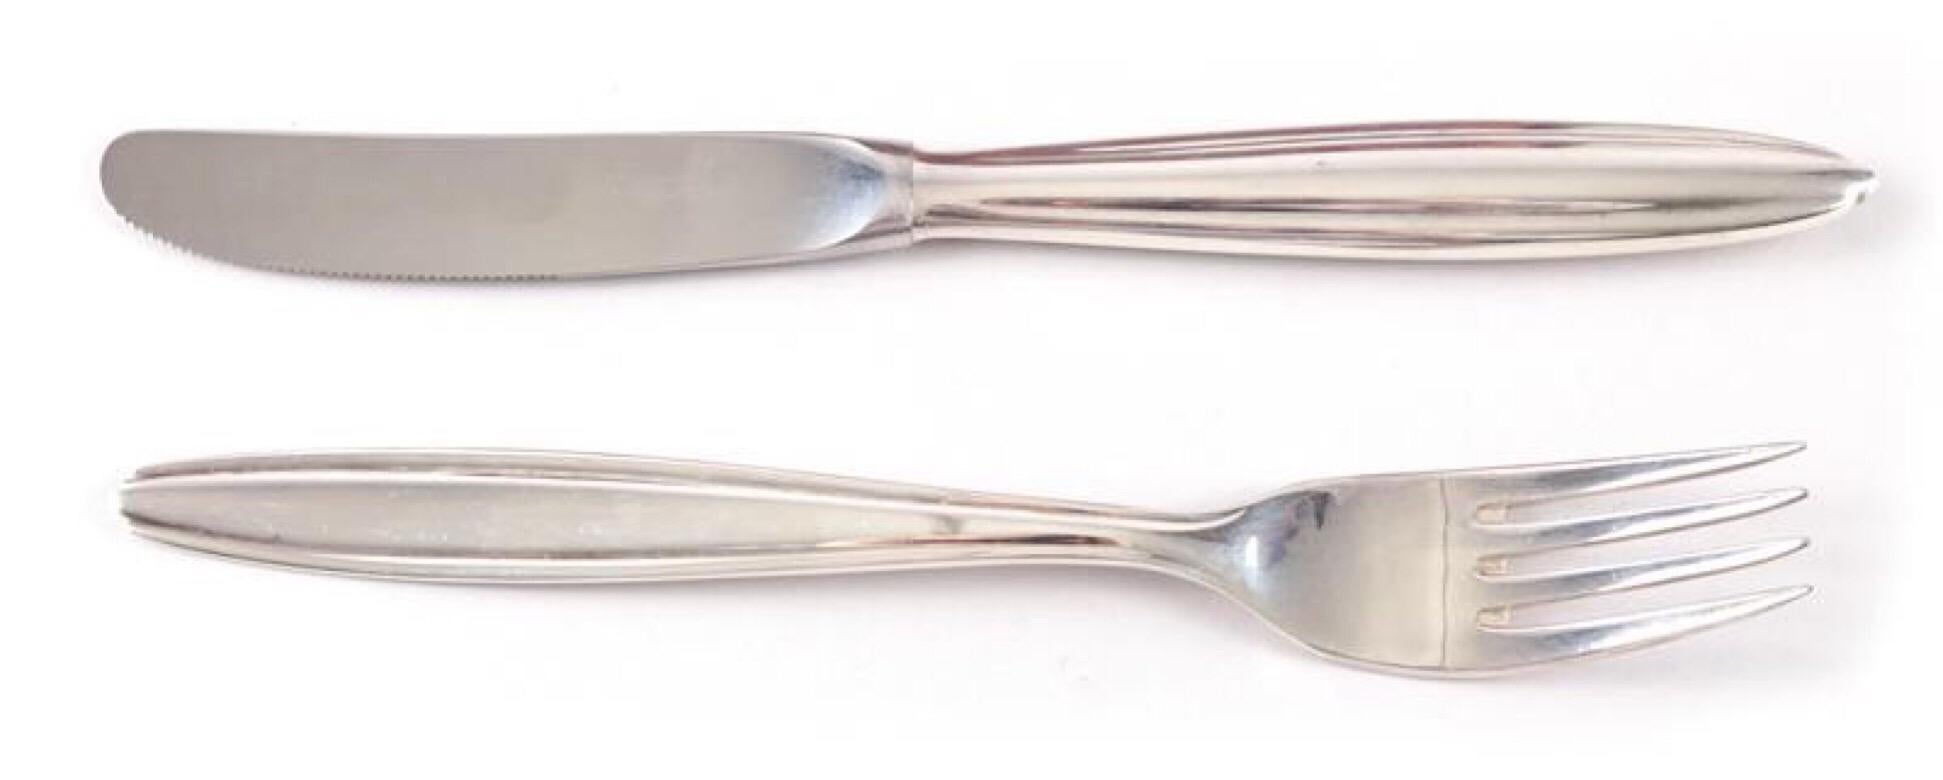 Early 20th Century Klinkosh Silver 800 Cutlery Set, 6 Person